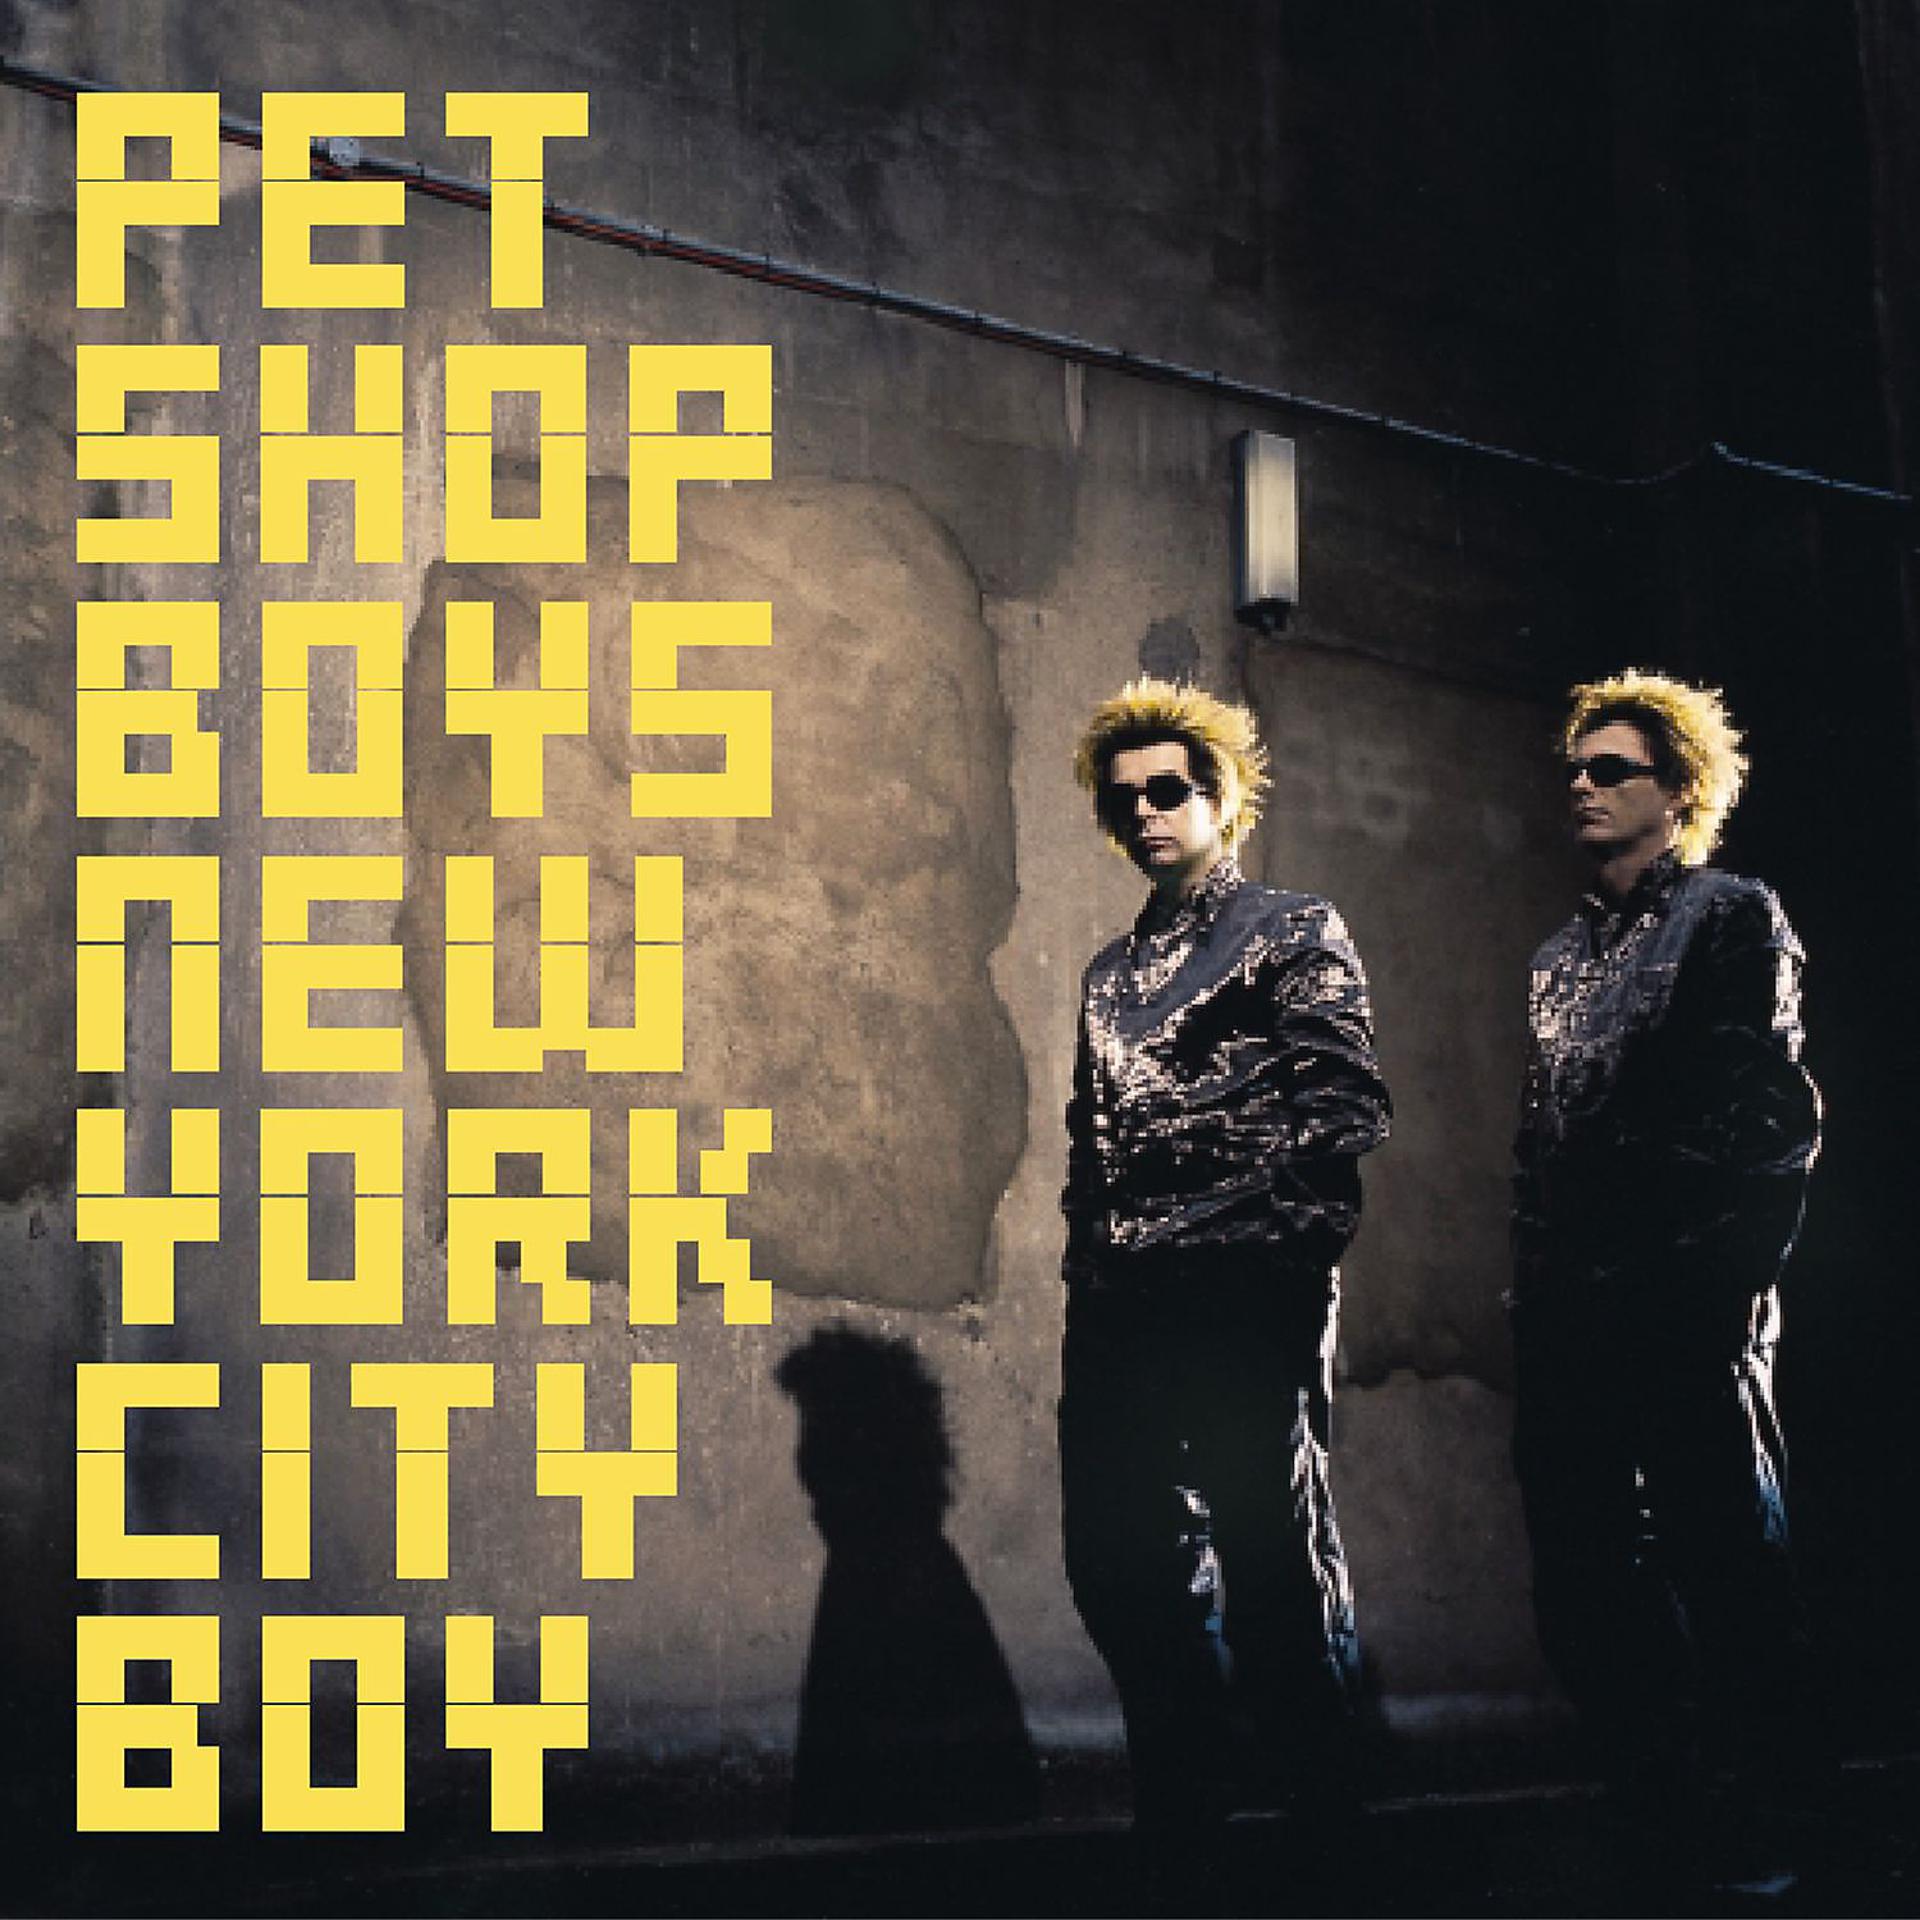 Постер альбома New York City Boy